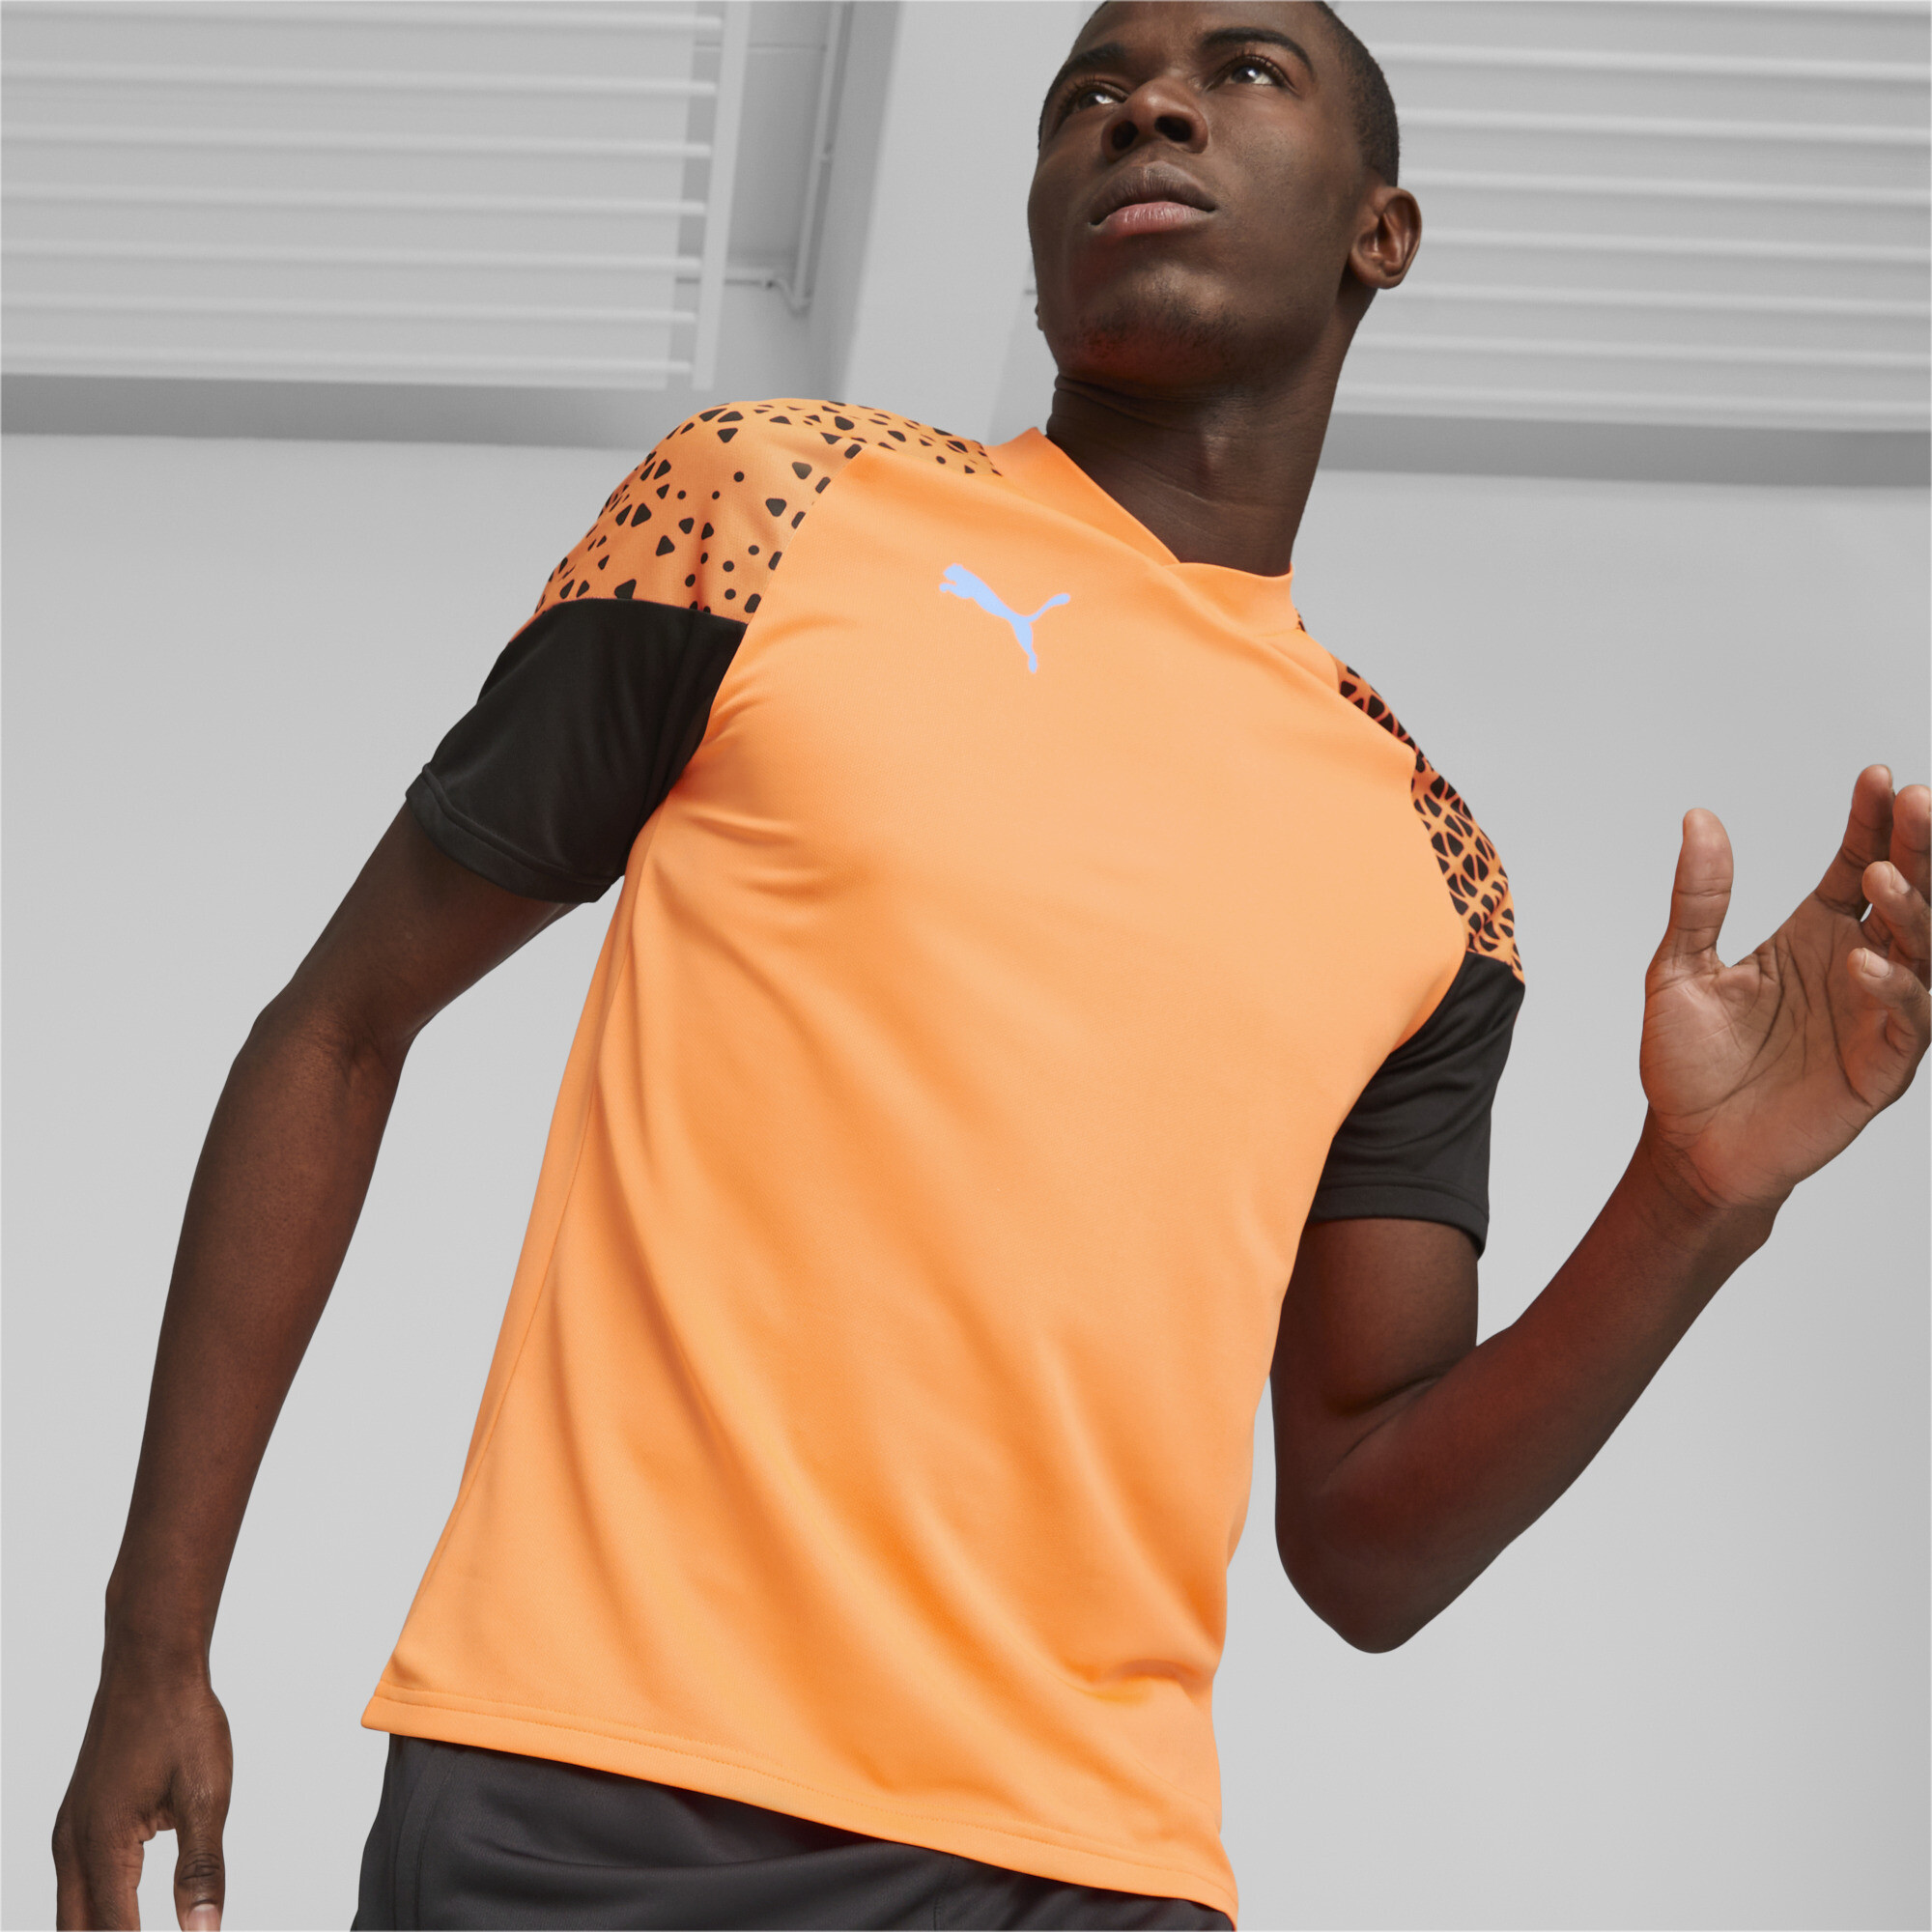 Men's Puma Individual CUP Football Jersey, Orange, Size M, Clothing